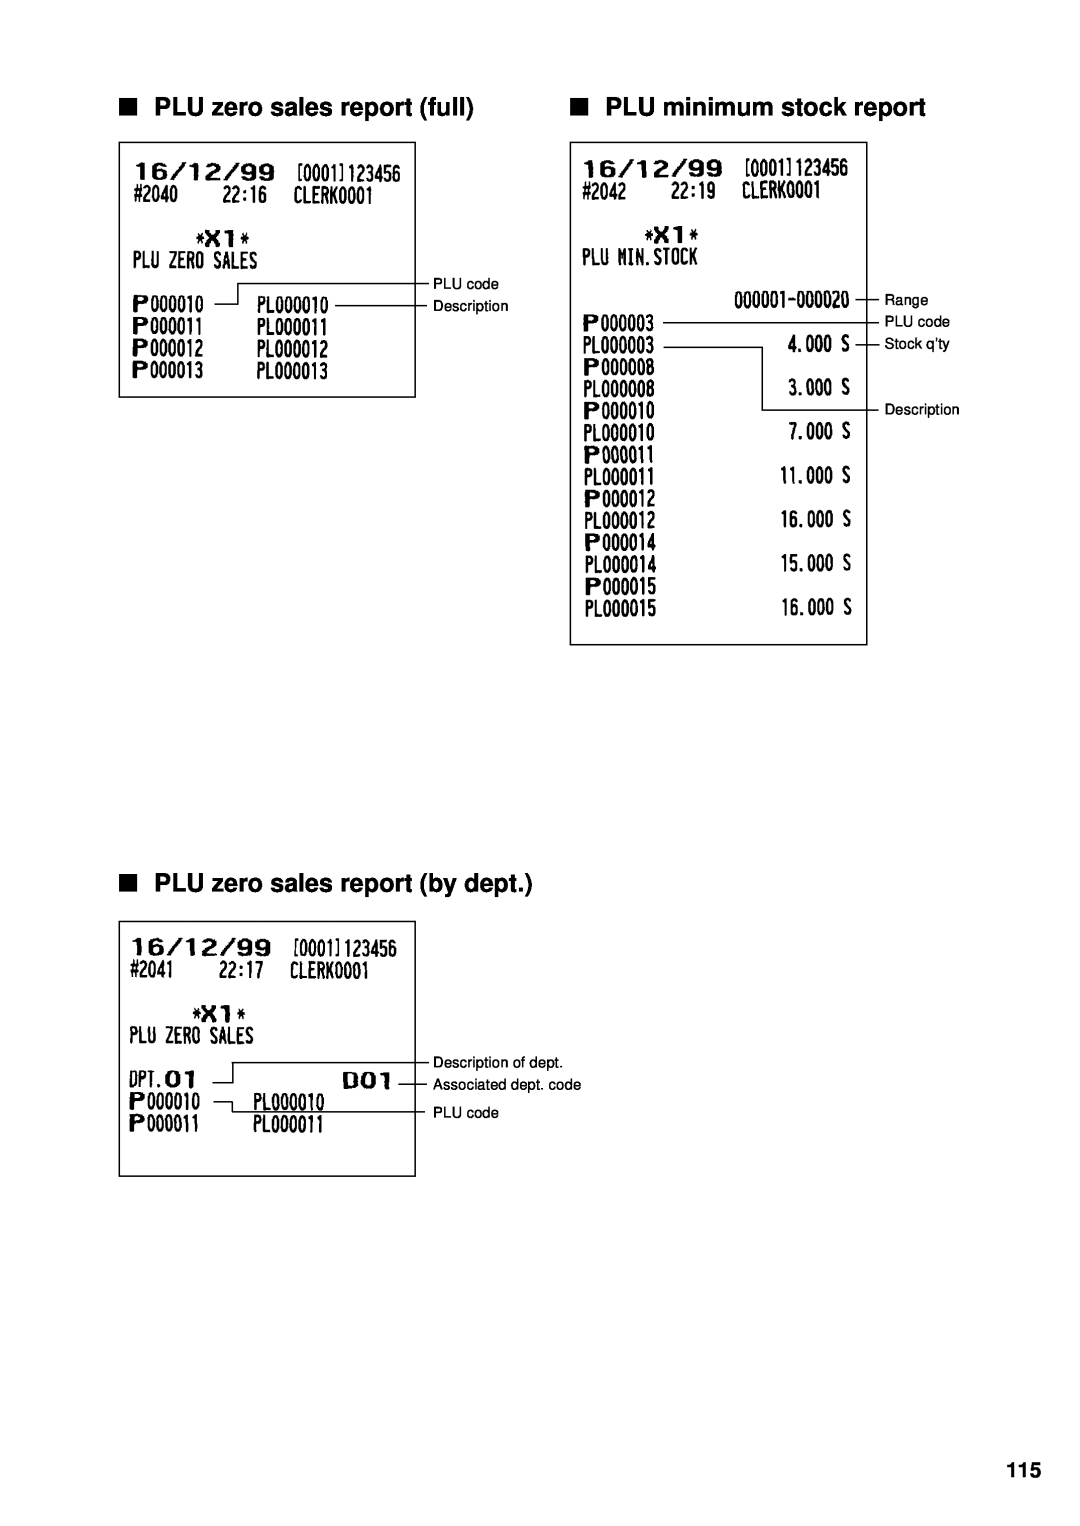 Sharp UP-3300 PLU zero sales report full, PLU minimum stock report, PLU zero sales report by dept, PLU code Description 